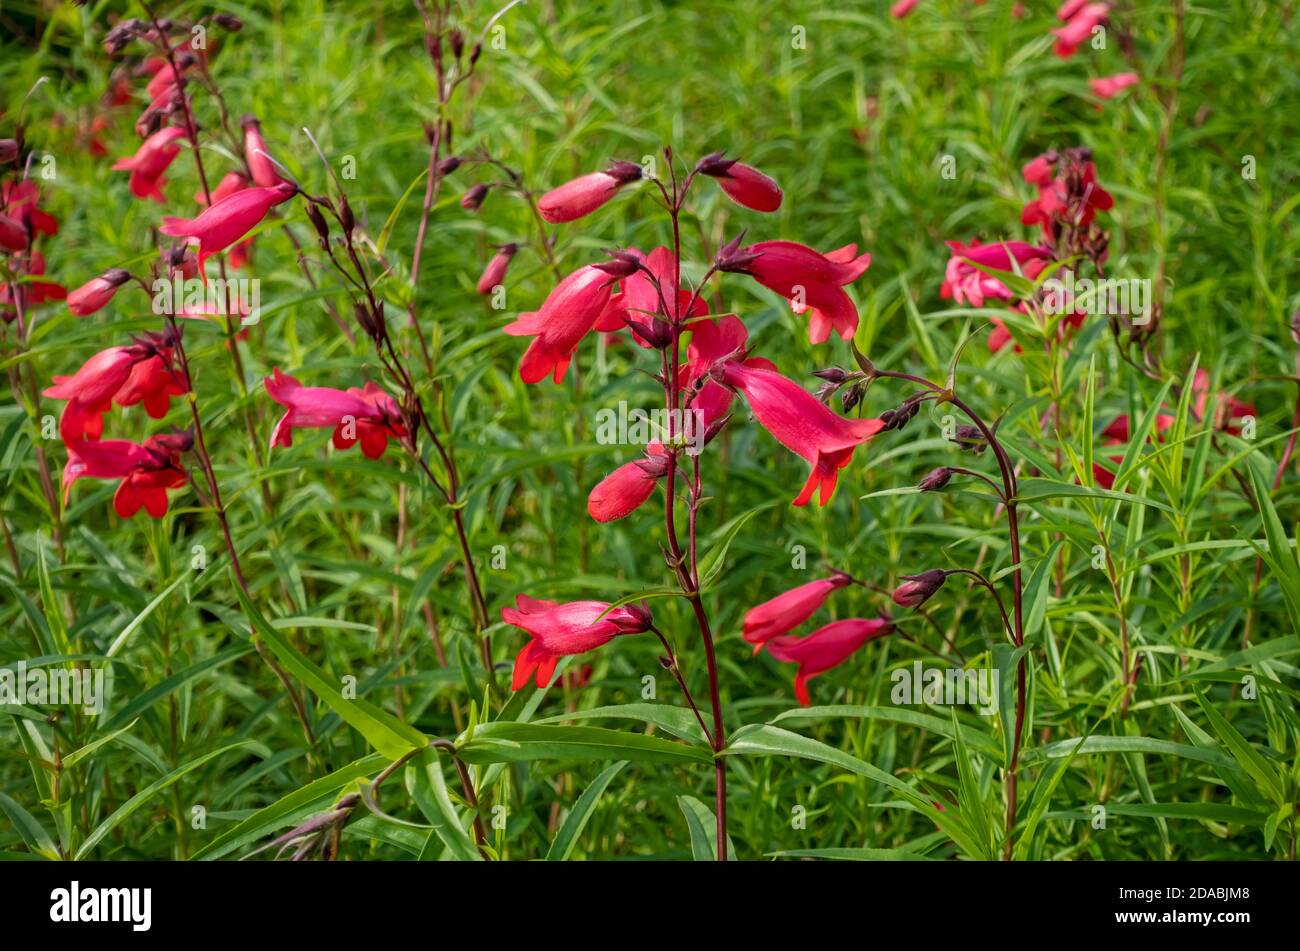 Close up of pink penstemon flower flowers flowering in summer garden England UK United Kingdom GB Great Britain Stock Photo